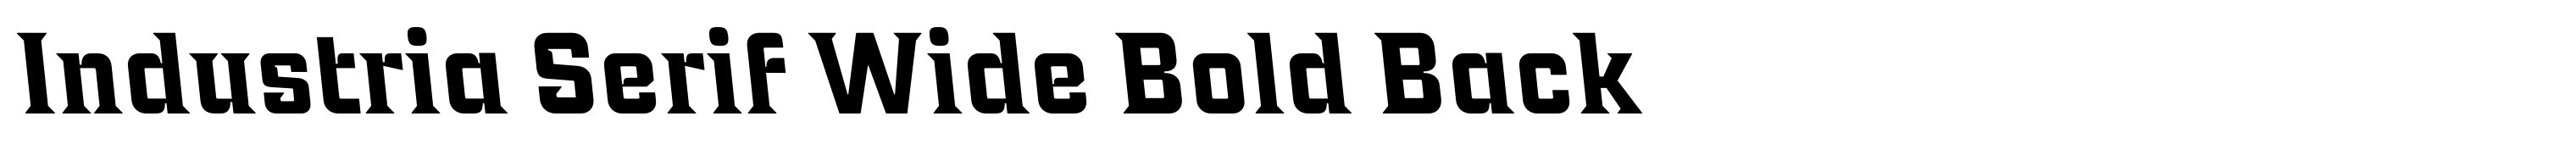 Industria Serif Wide Bold Back